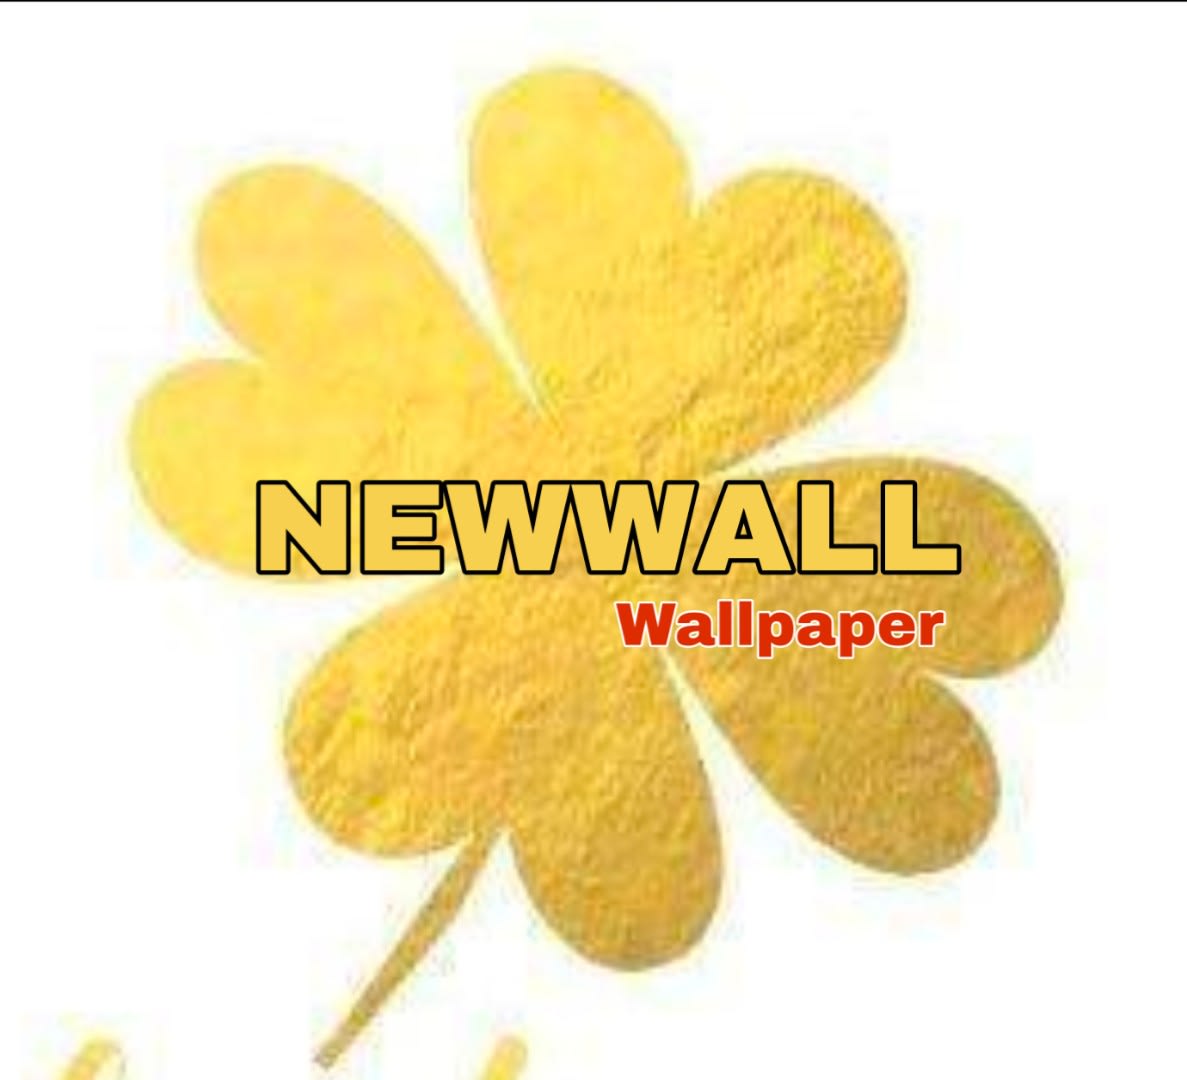 New Wall